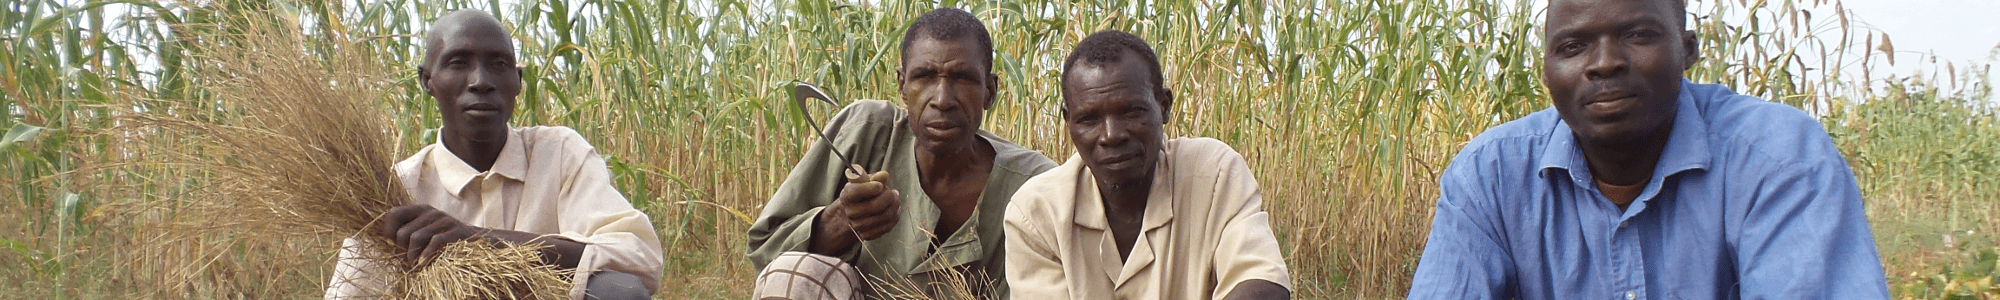 Fonio and Bambara groundnut in Mali